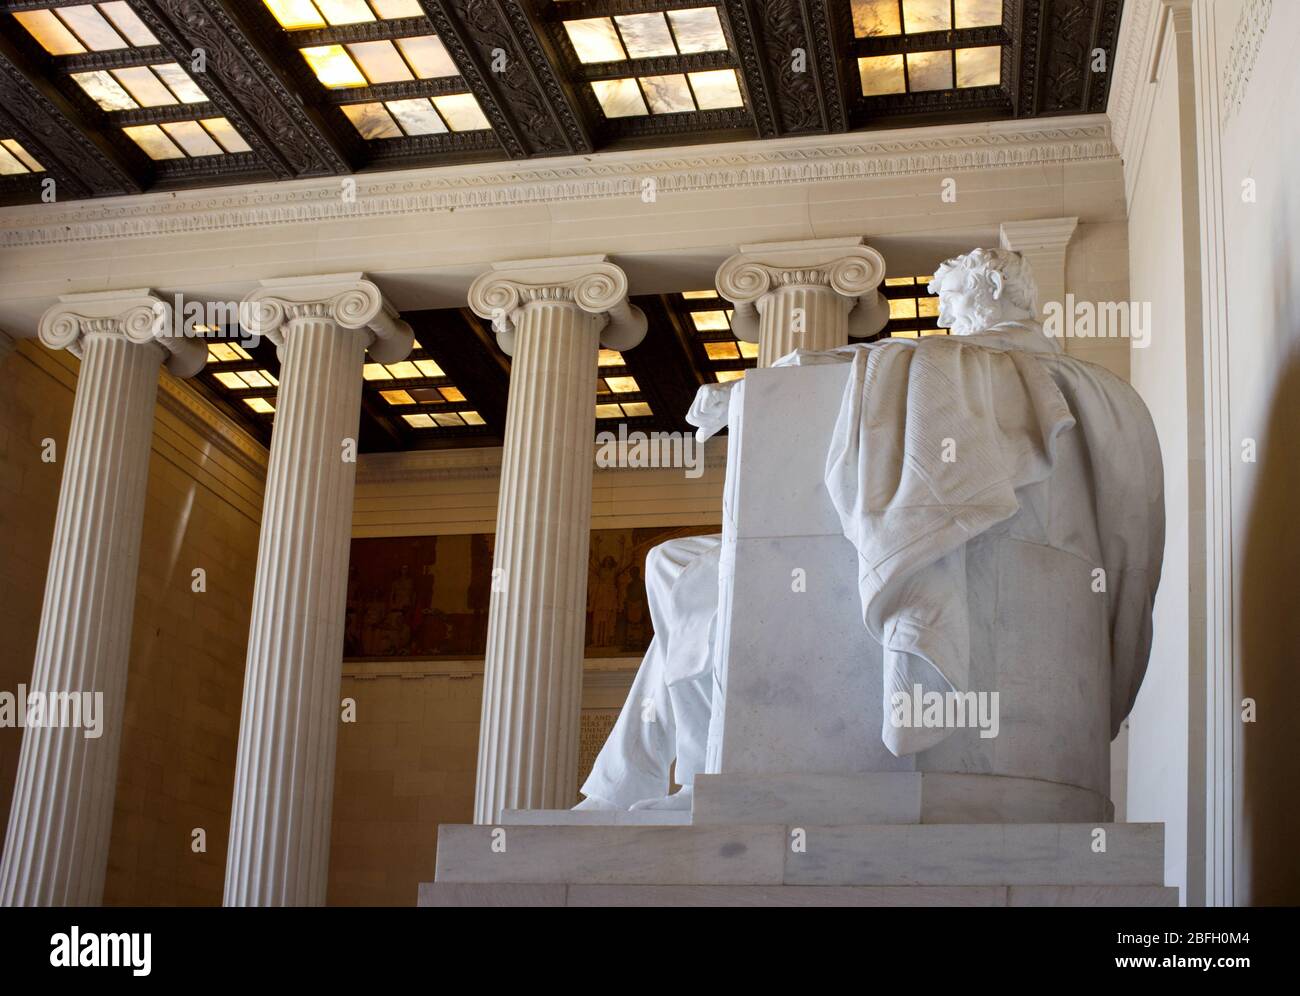 Lincoln Memorial, National Mall, Washington D.C., USA Stock Photo